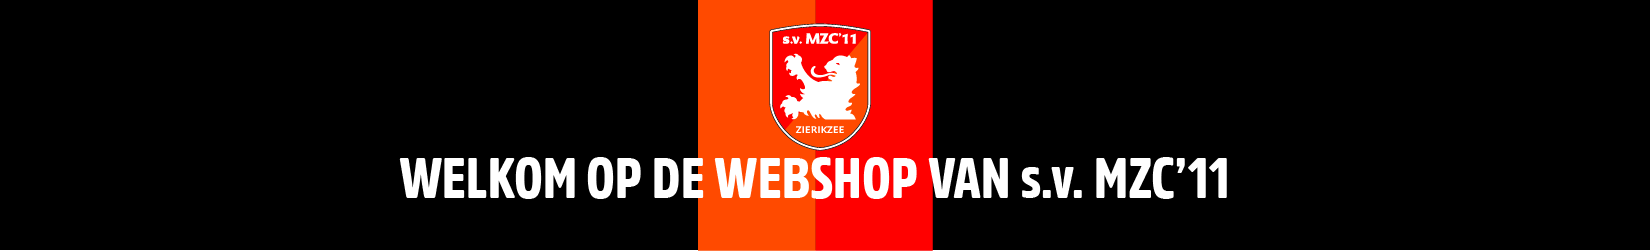 MZC11 webshop